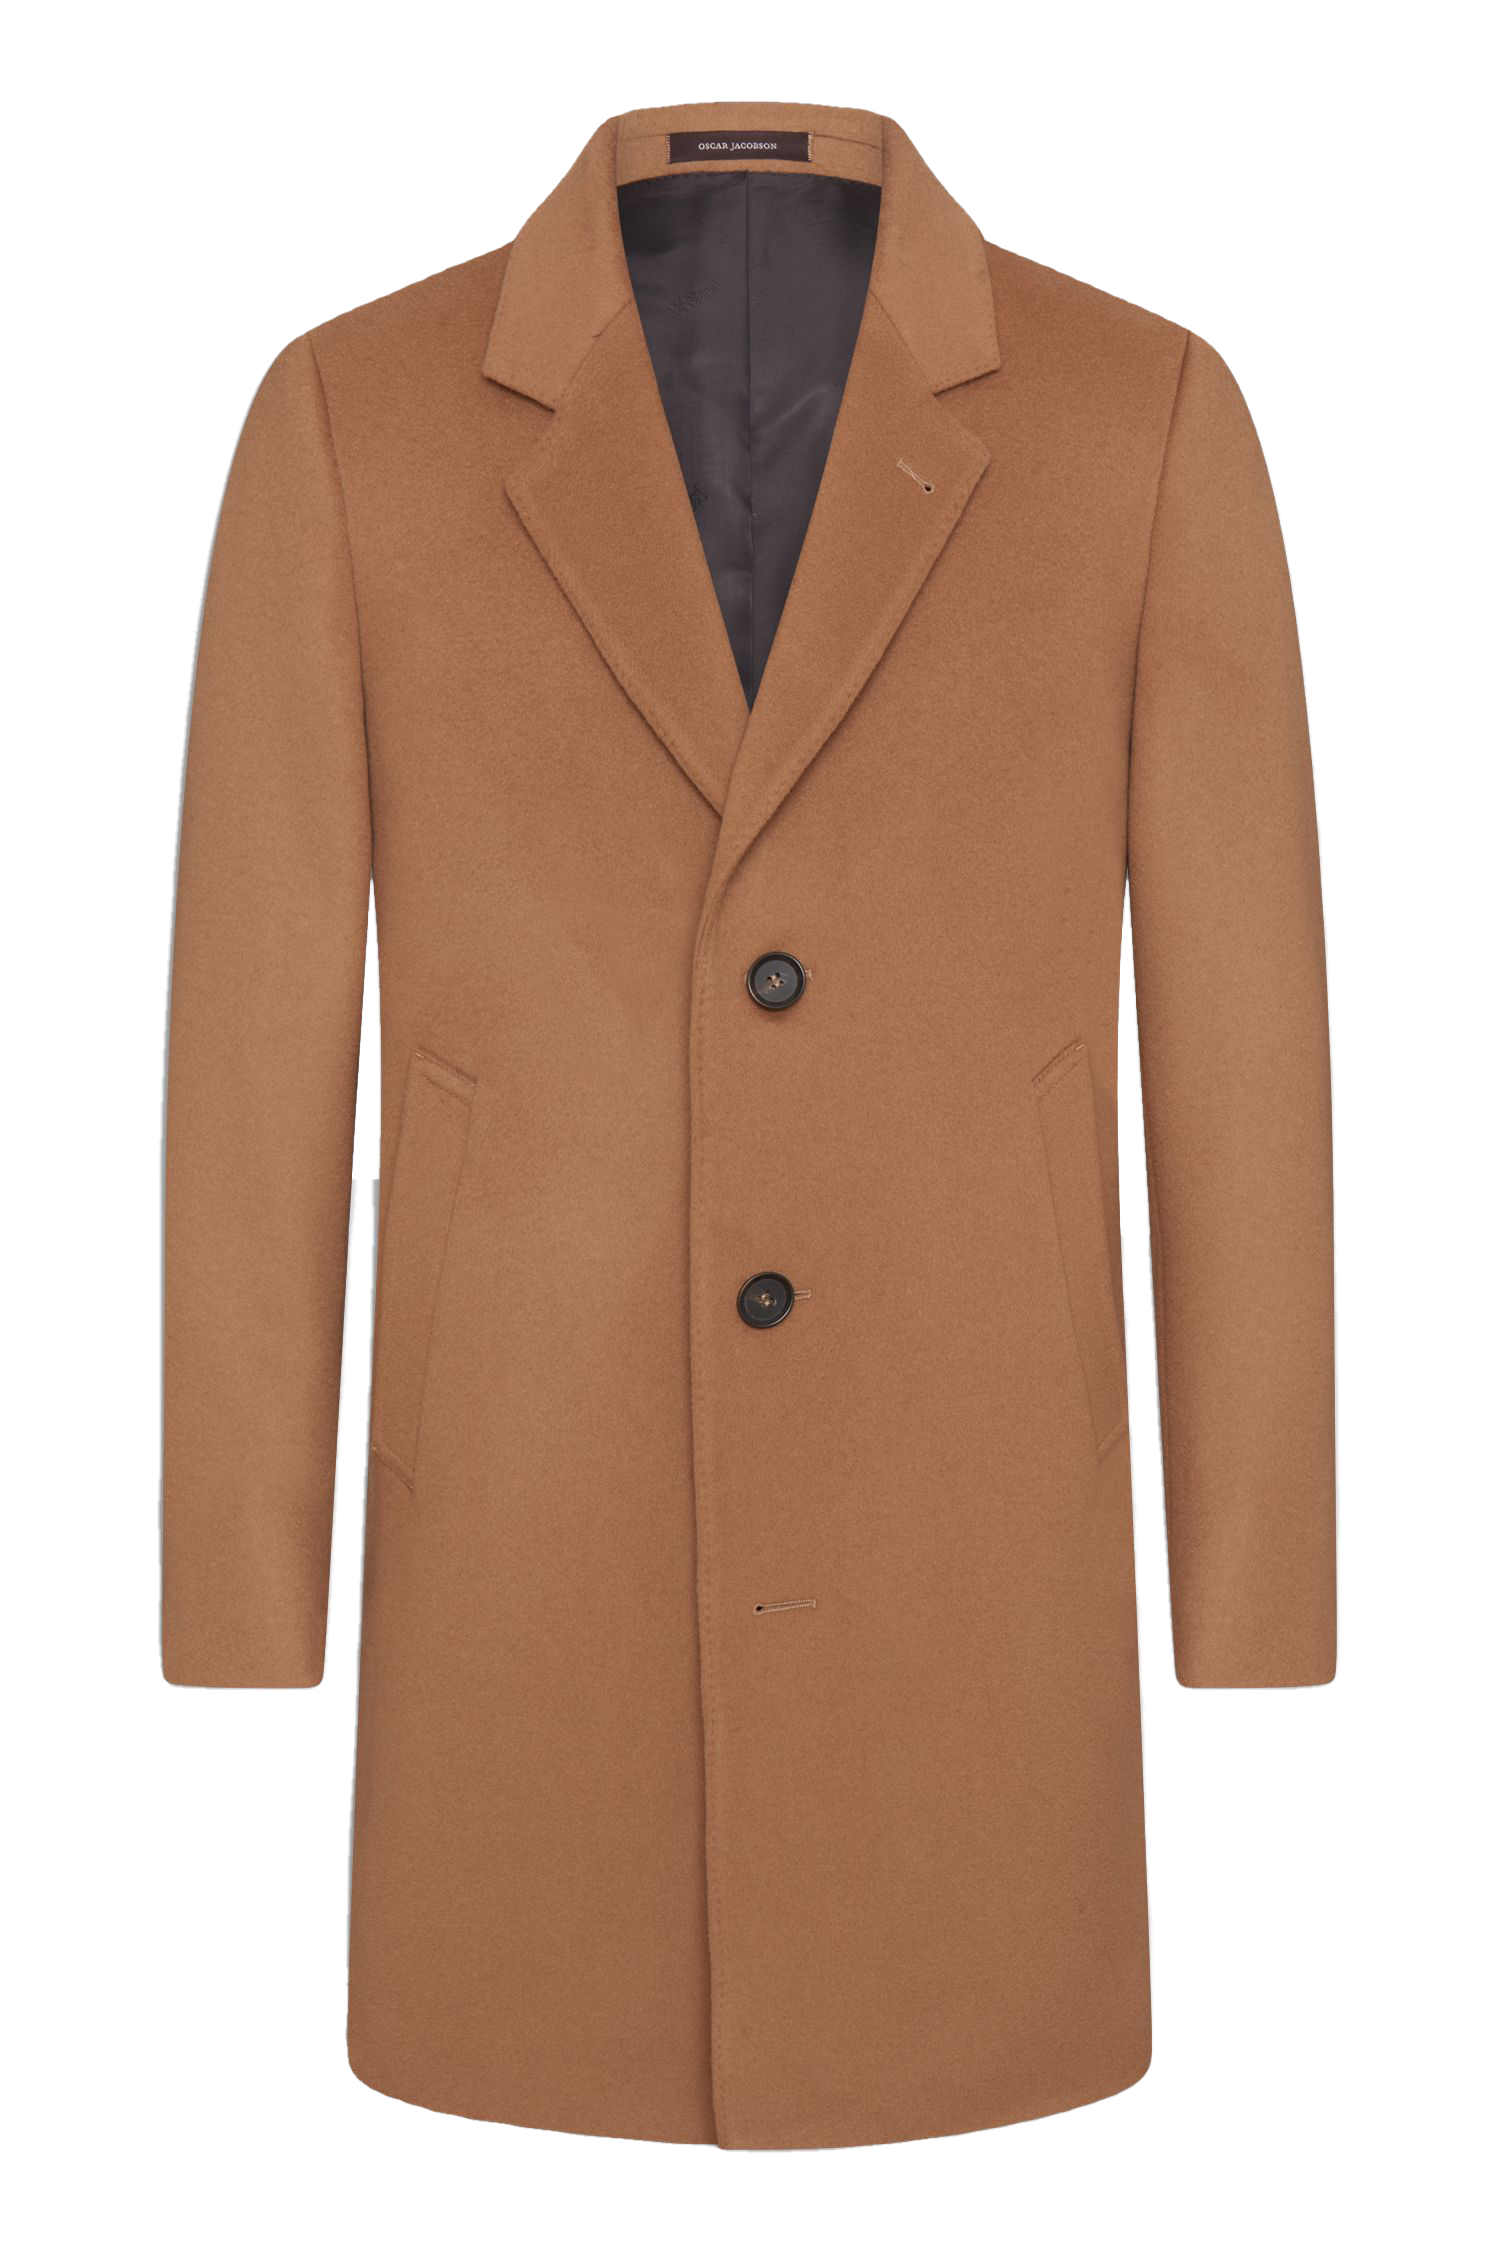 Shaw coat